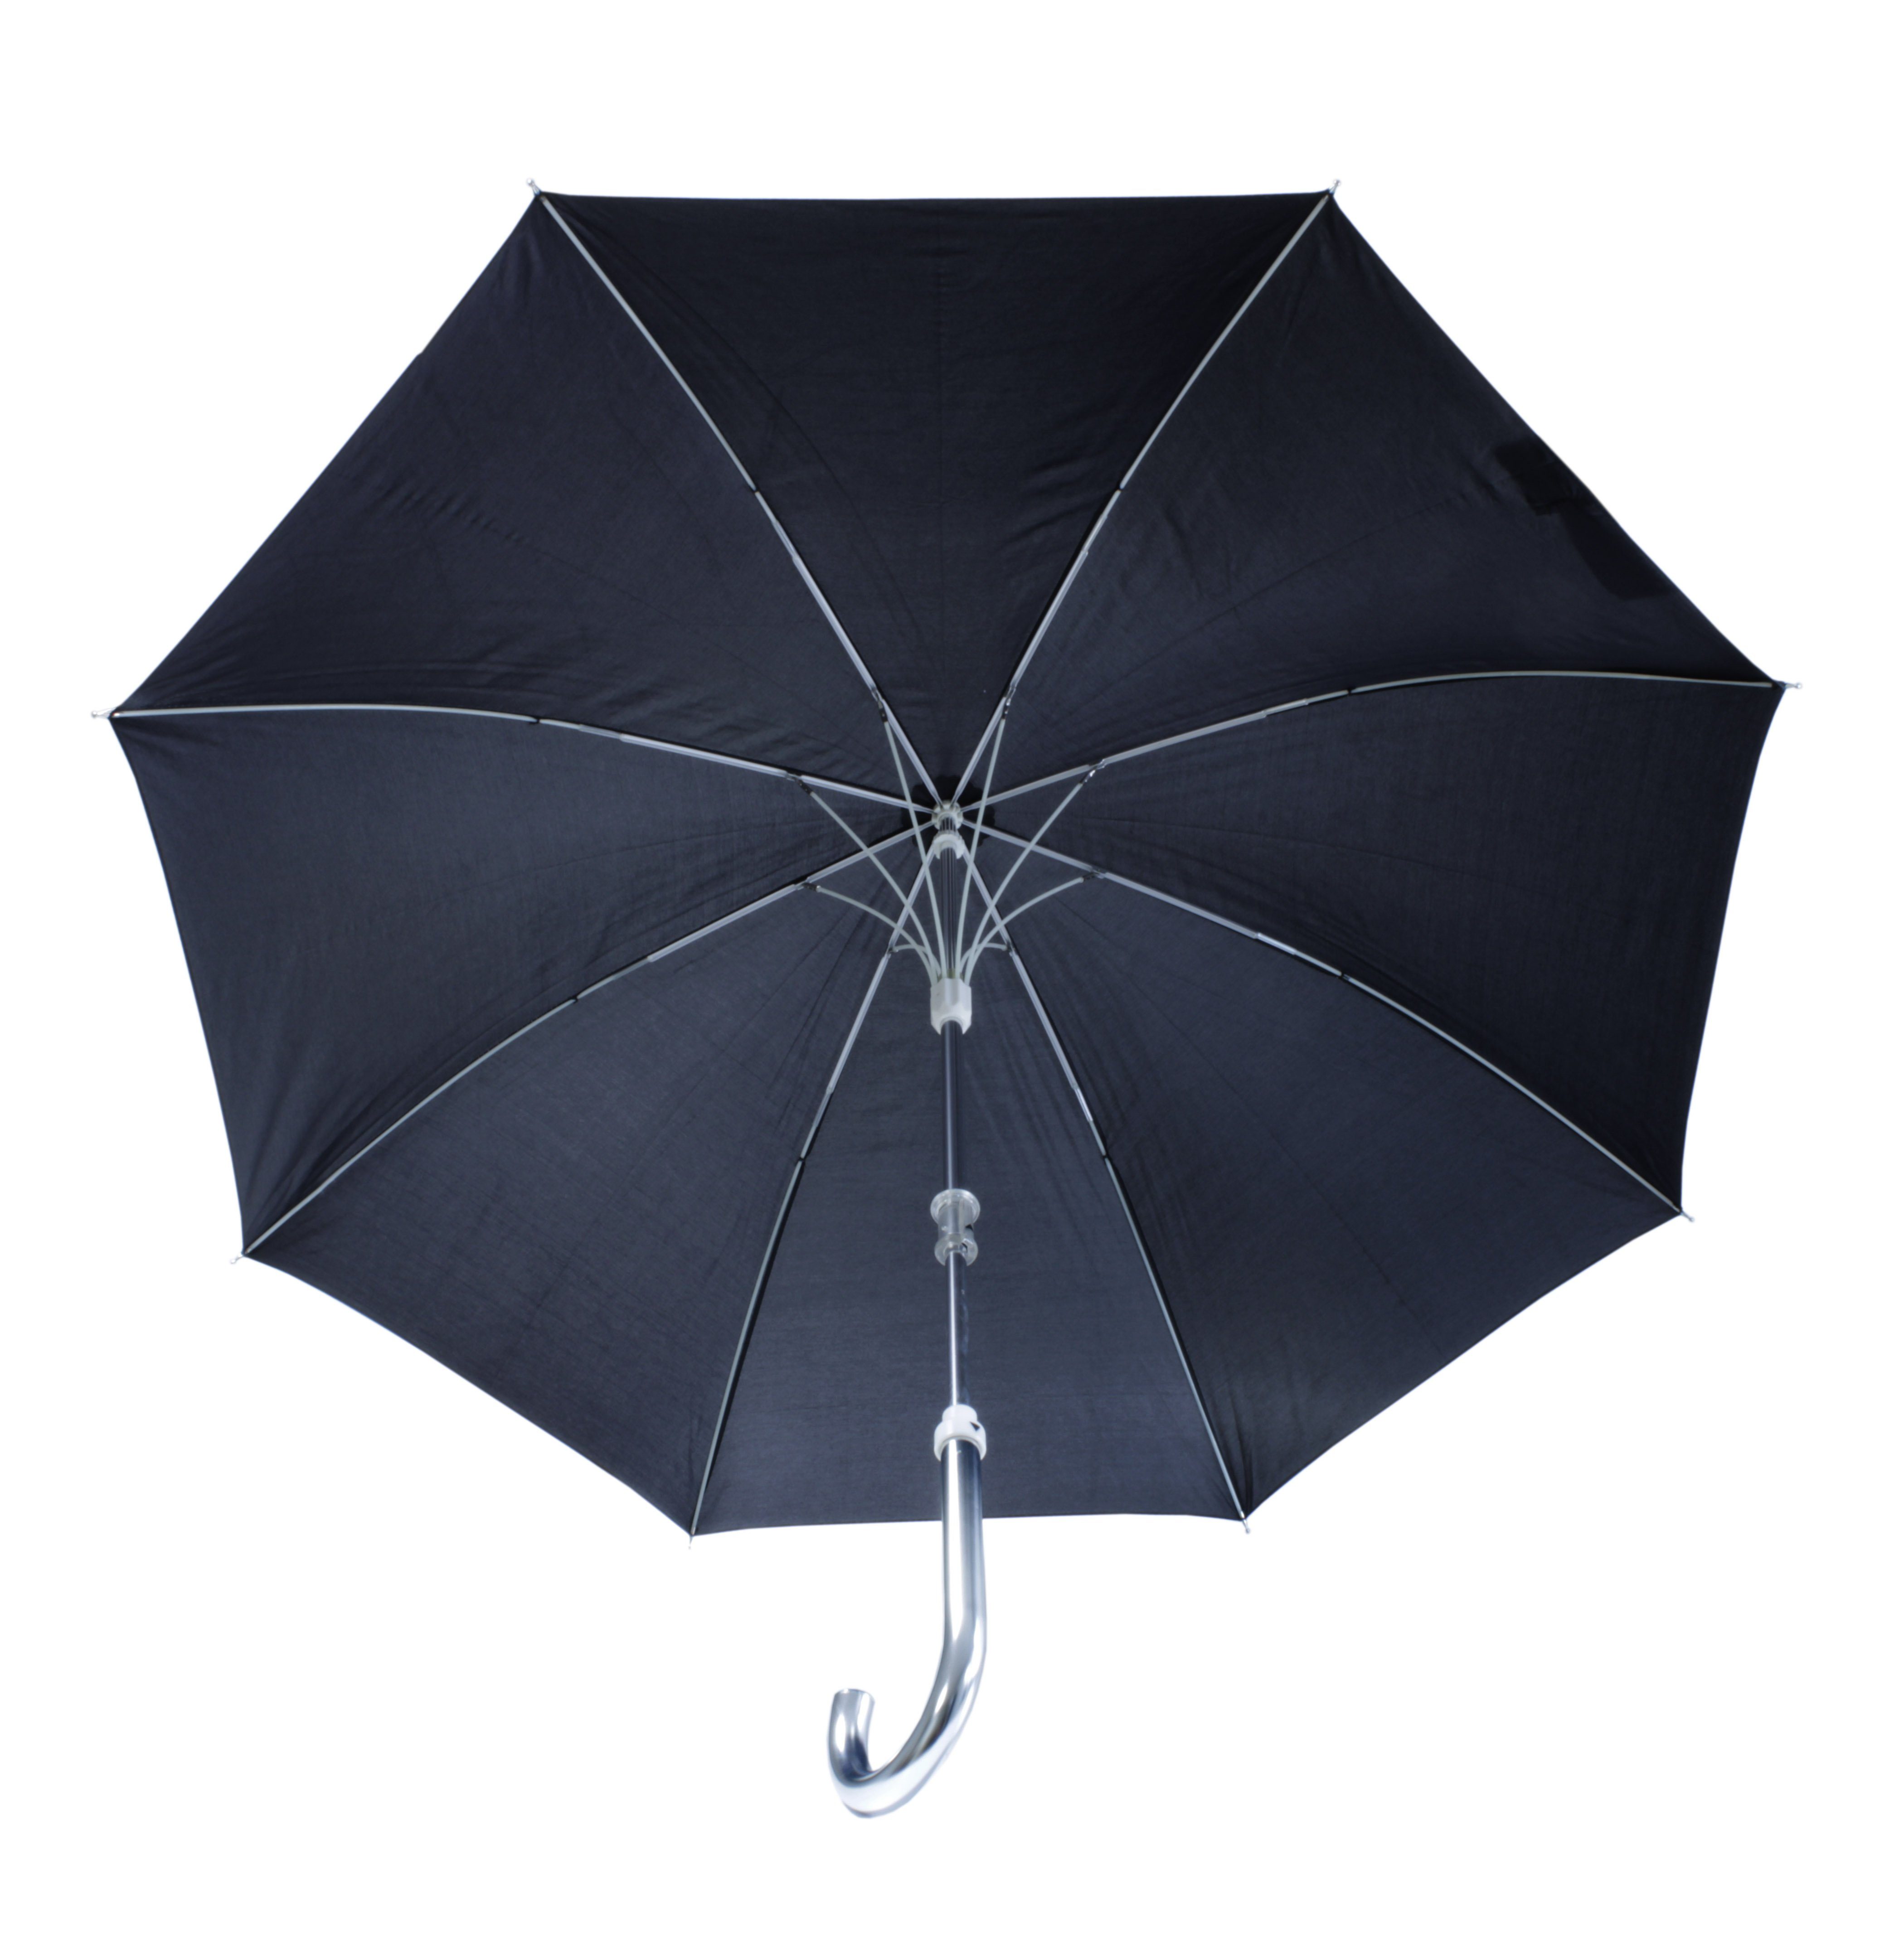 Stockregenschirm 110 windfest gebogen, schwarz mit Stockschirm cm Regenschirm Metallspitze Spetebo